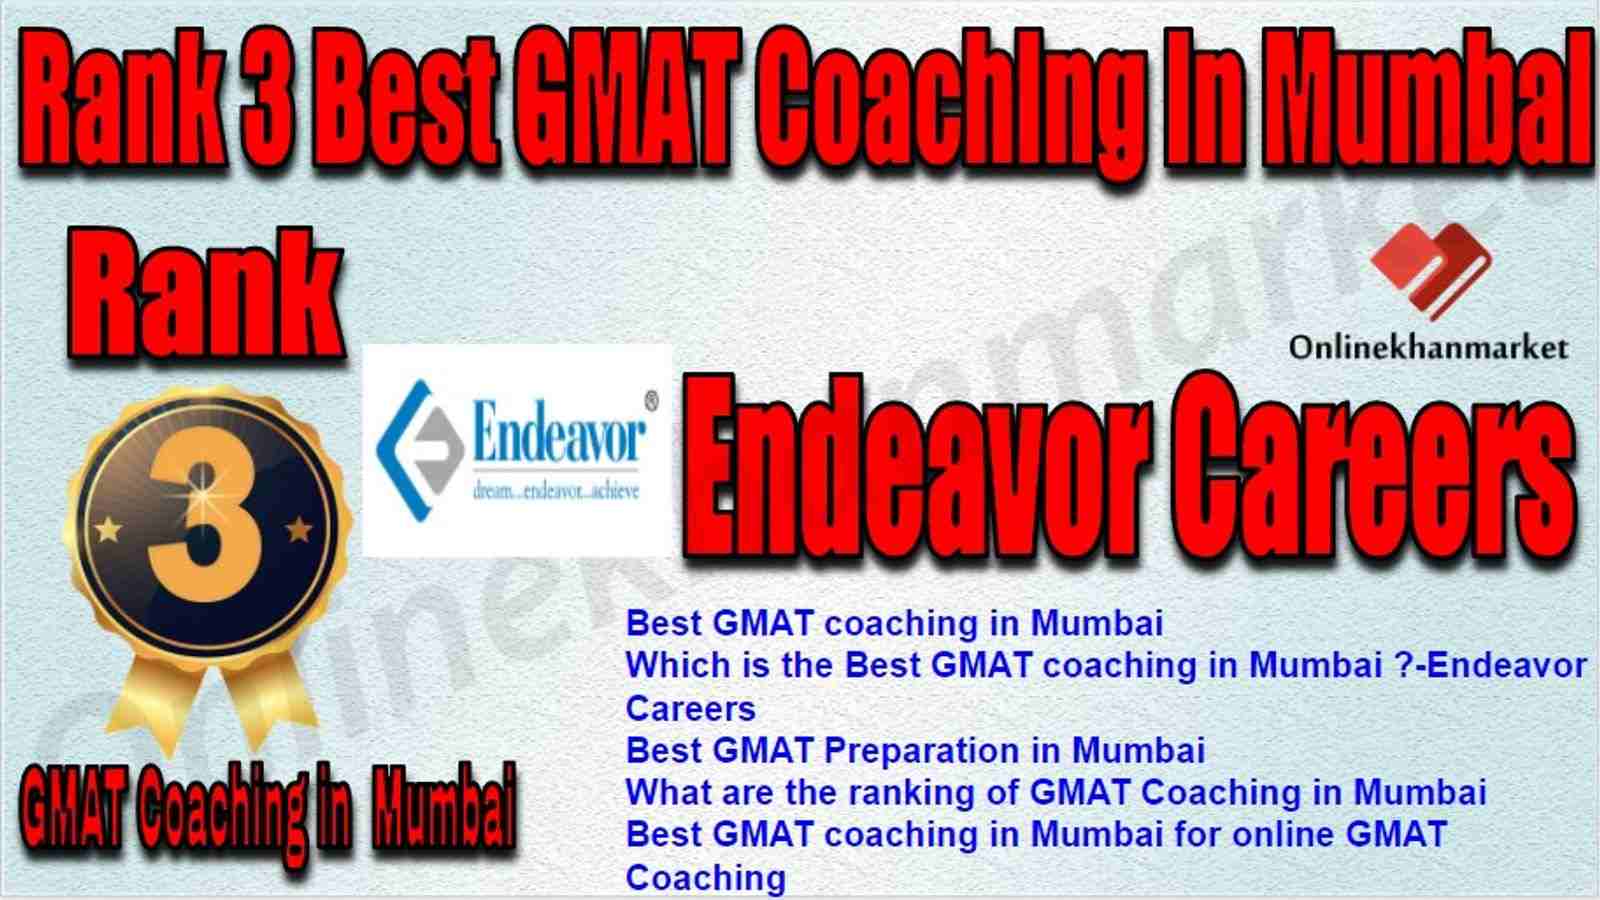 Rank 3 Best GMAT Coaching in Mumbai